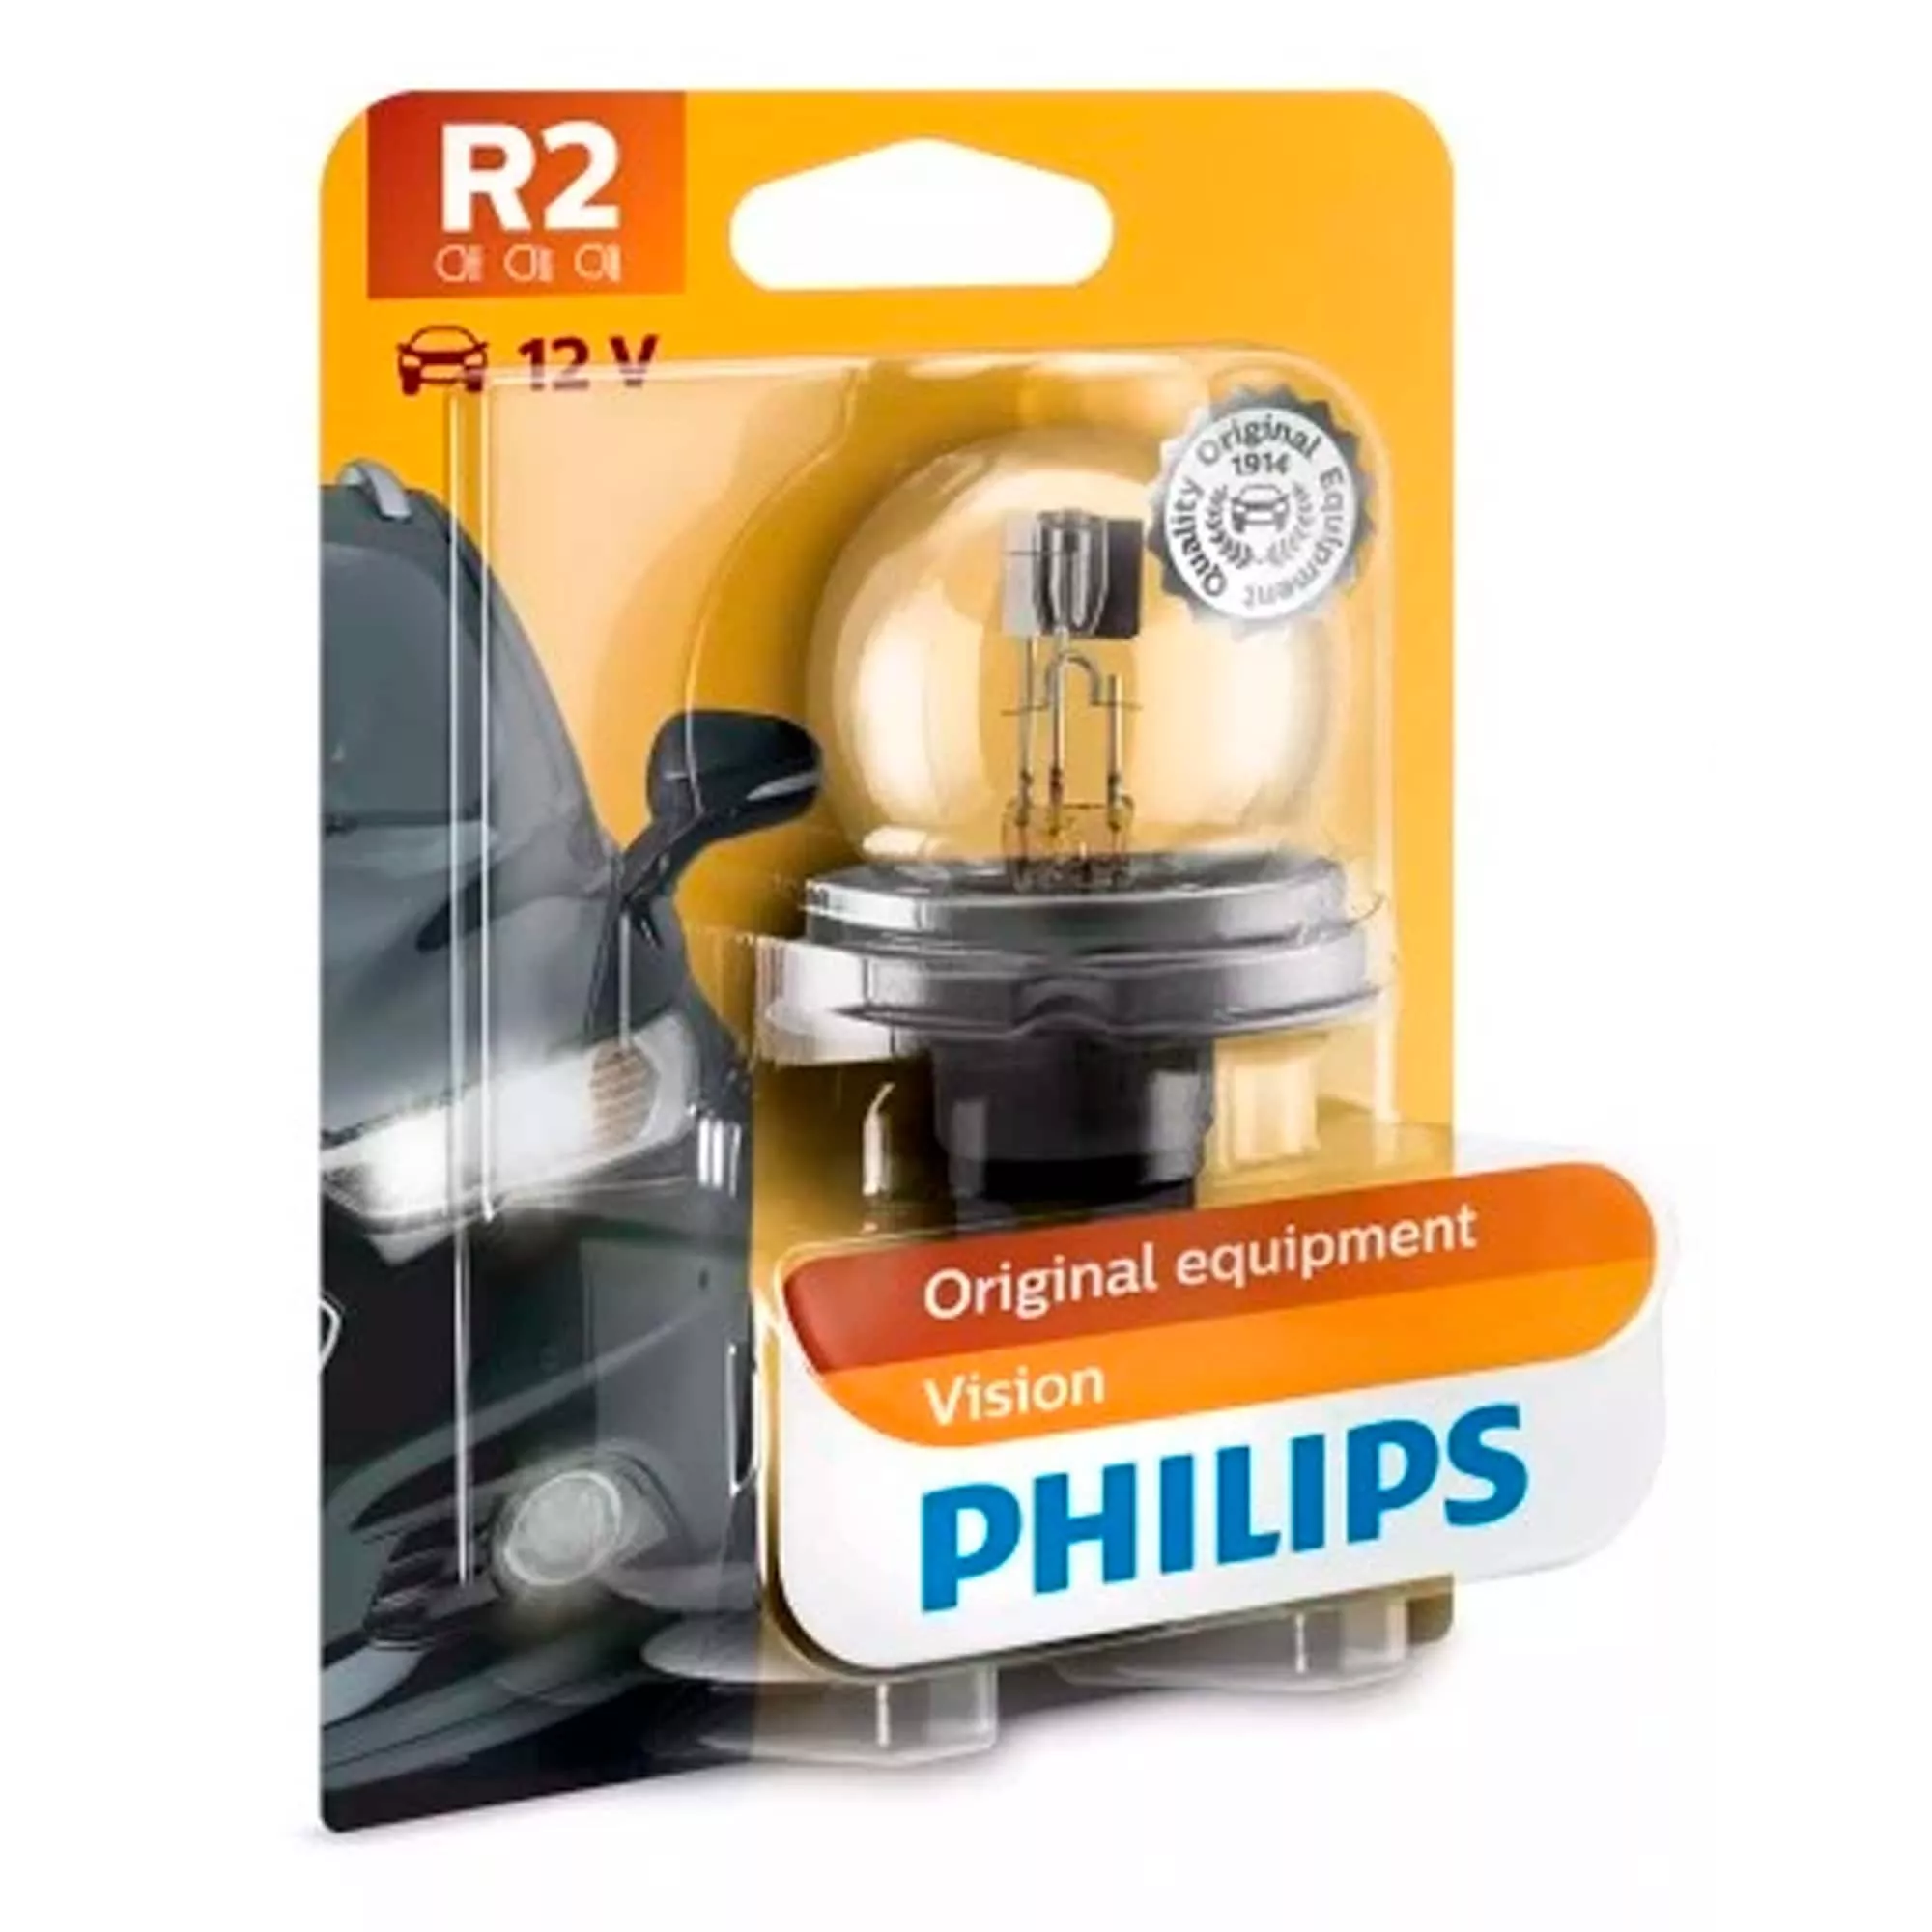 Лампа Philips Original equipment R2 12V 40W 5543930